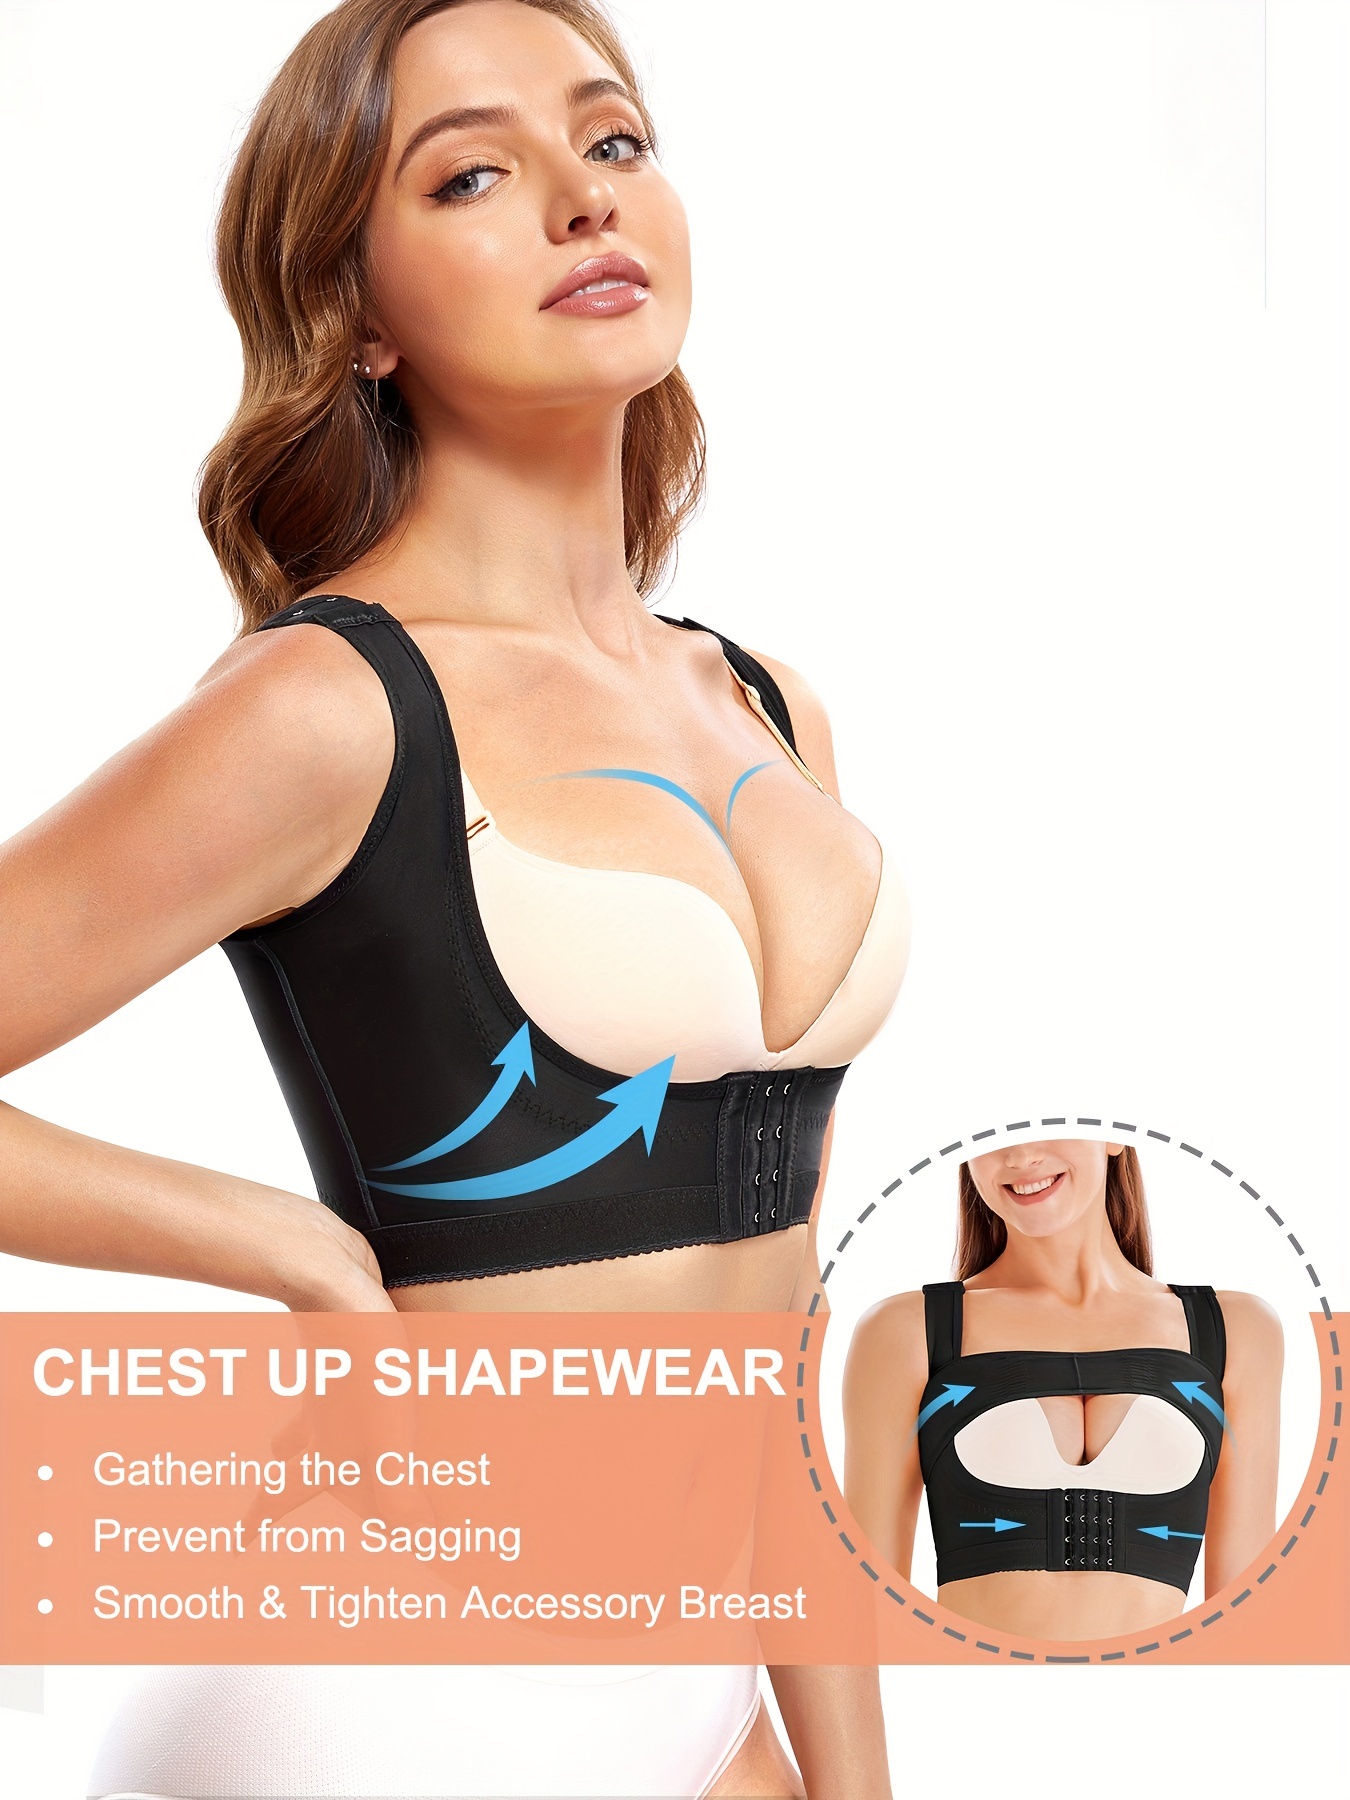 Post Surgical Shaping Tops, Breast Support Slimmer Sleeveless Body Shaper,  Women's Underwear & Shapewear